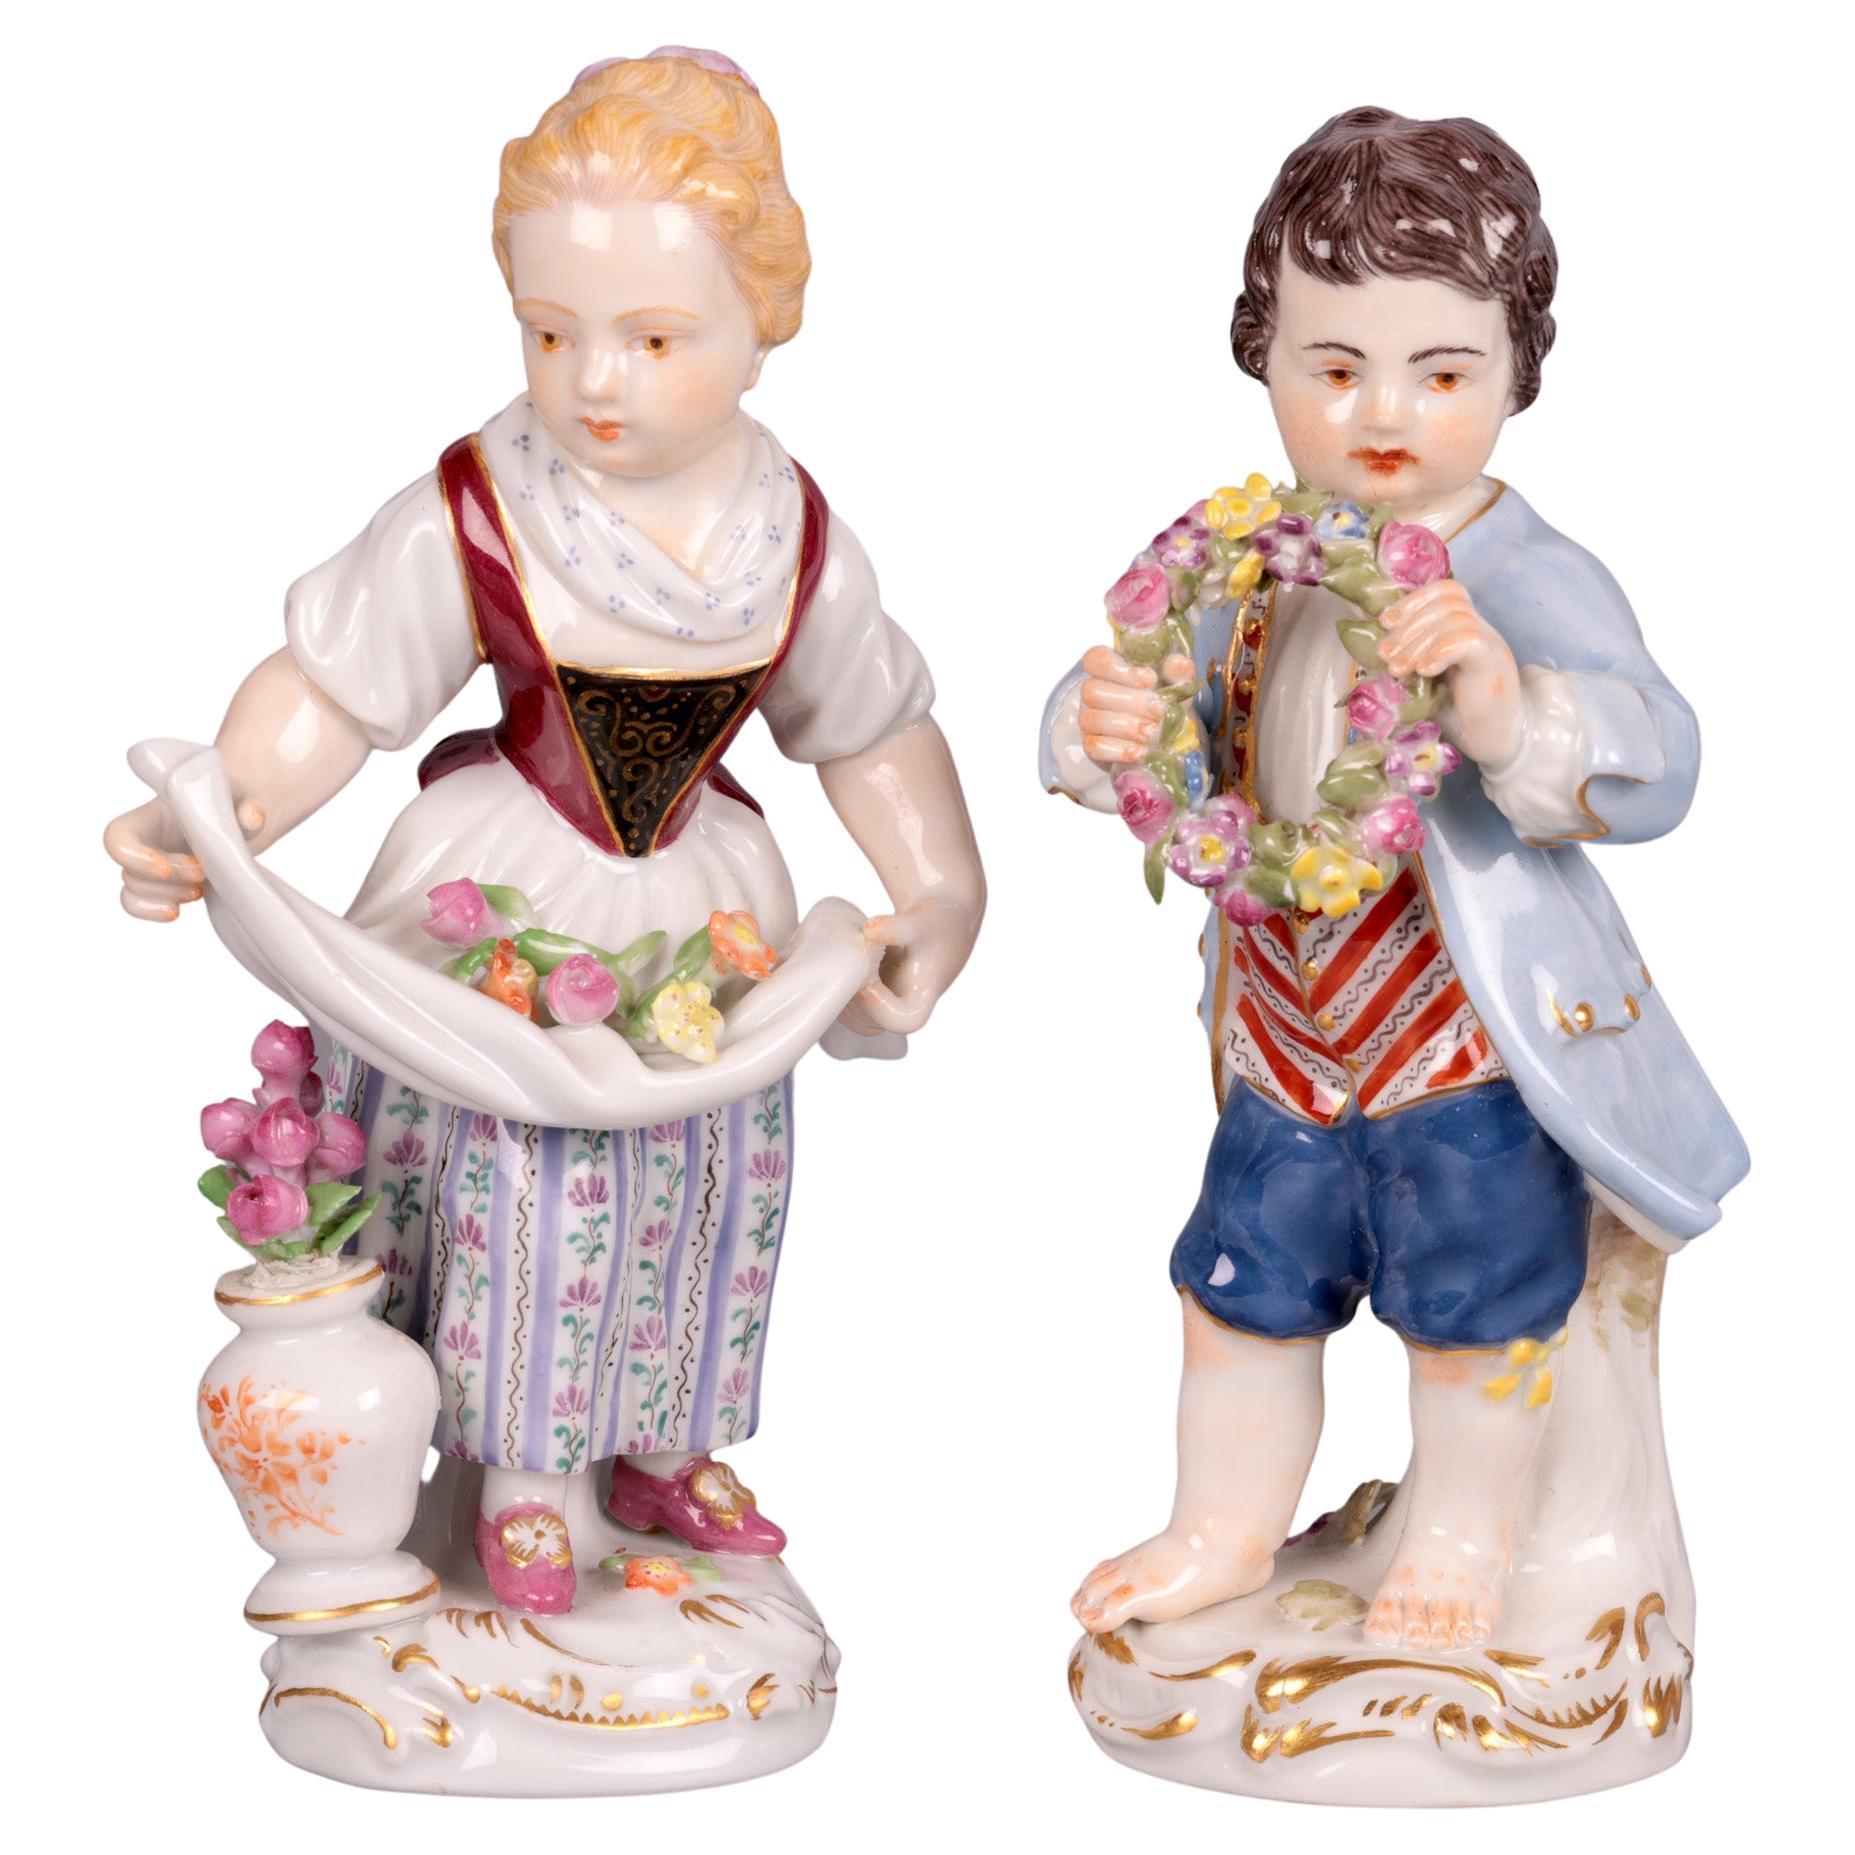 Meissen Boy & Girl Porcelain Figures with Flowers